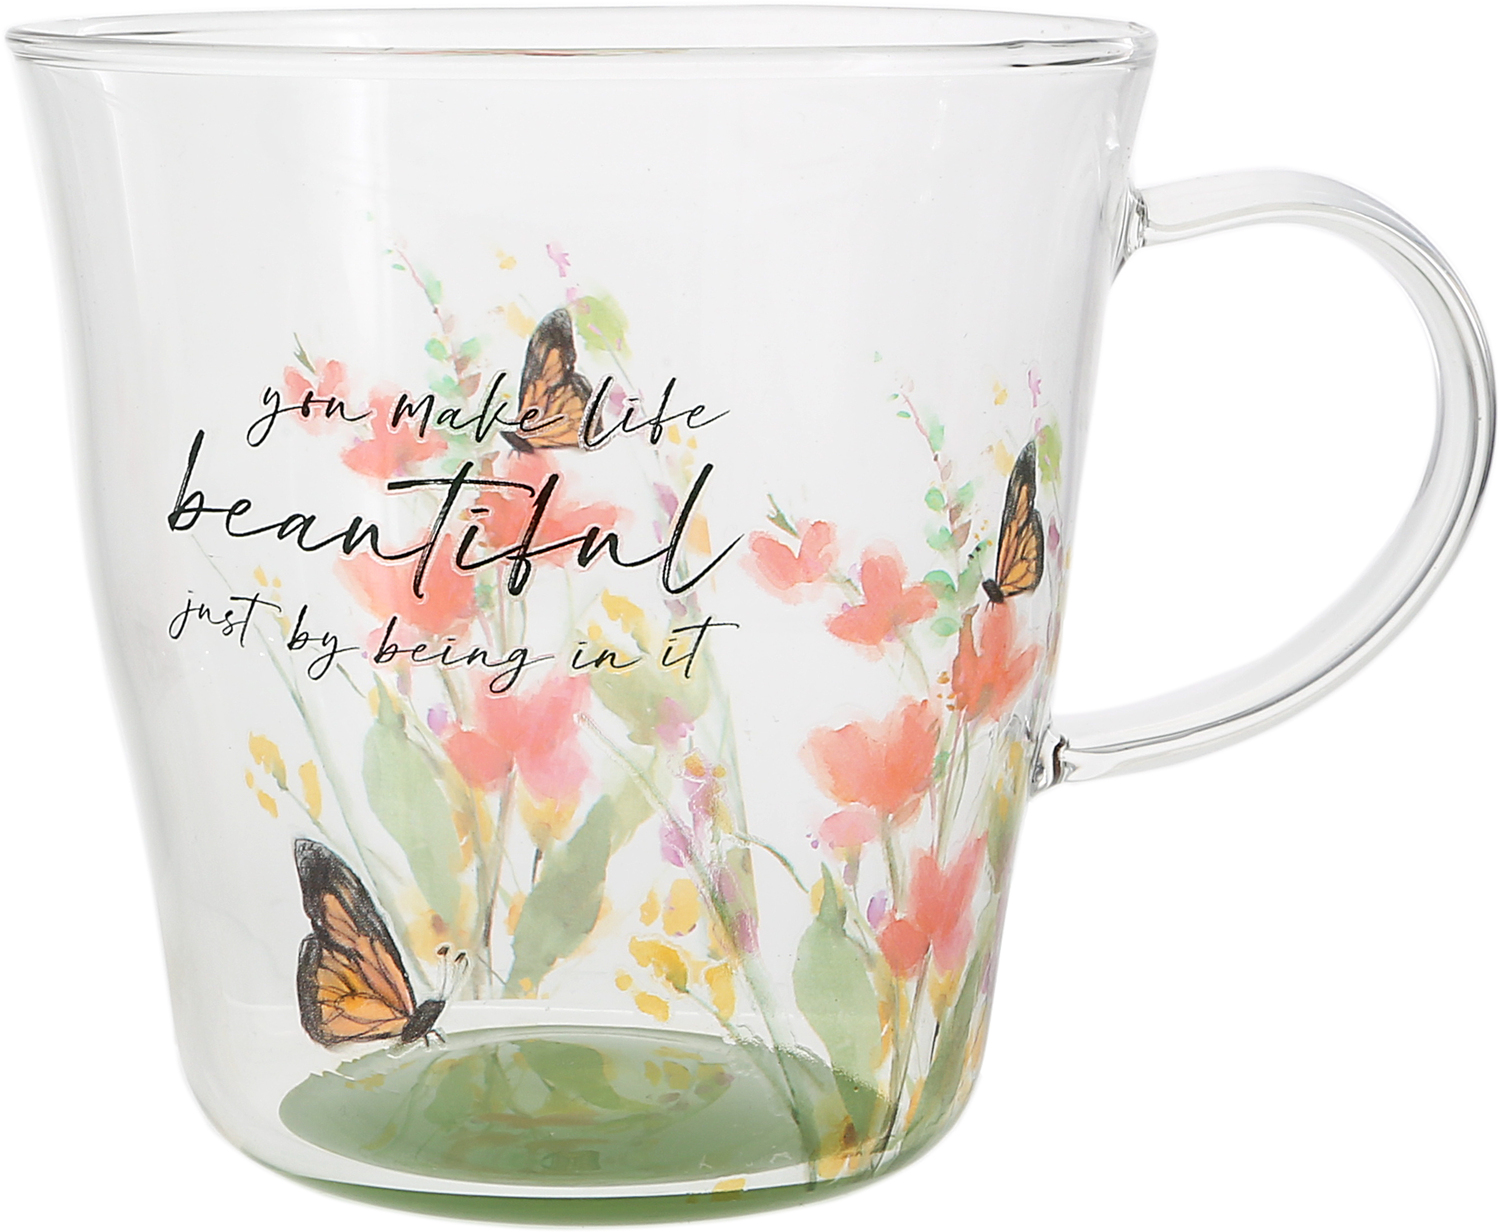 Make Life Beautiful by Meadows of Joy - Make Life Beautiful - 13.5 oz Glass Cup 